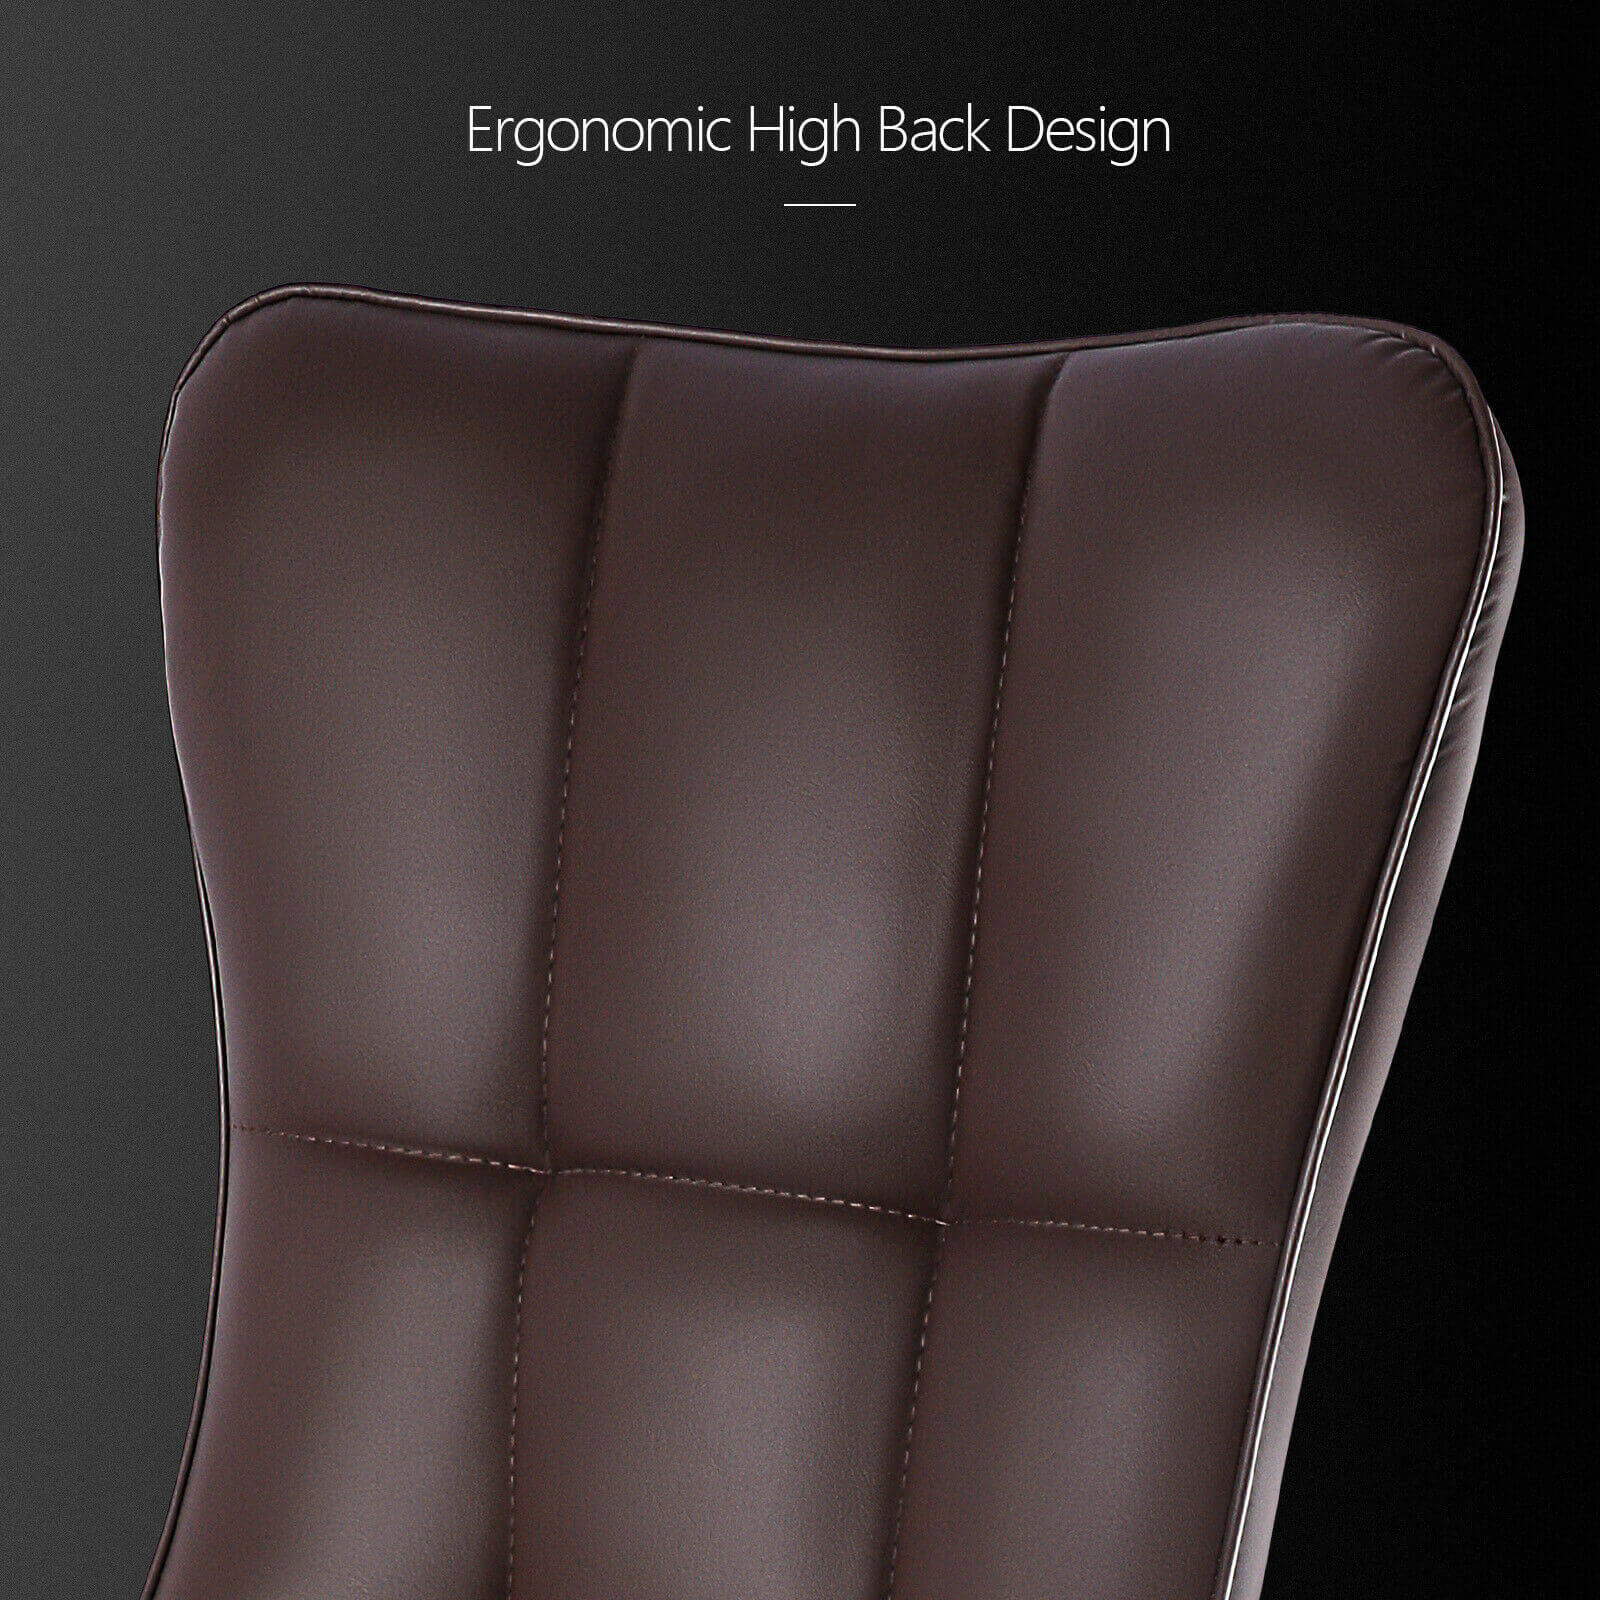 Ergonomic high back design of dining chair